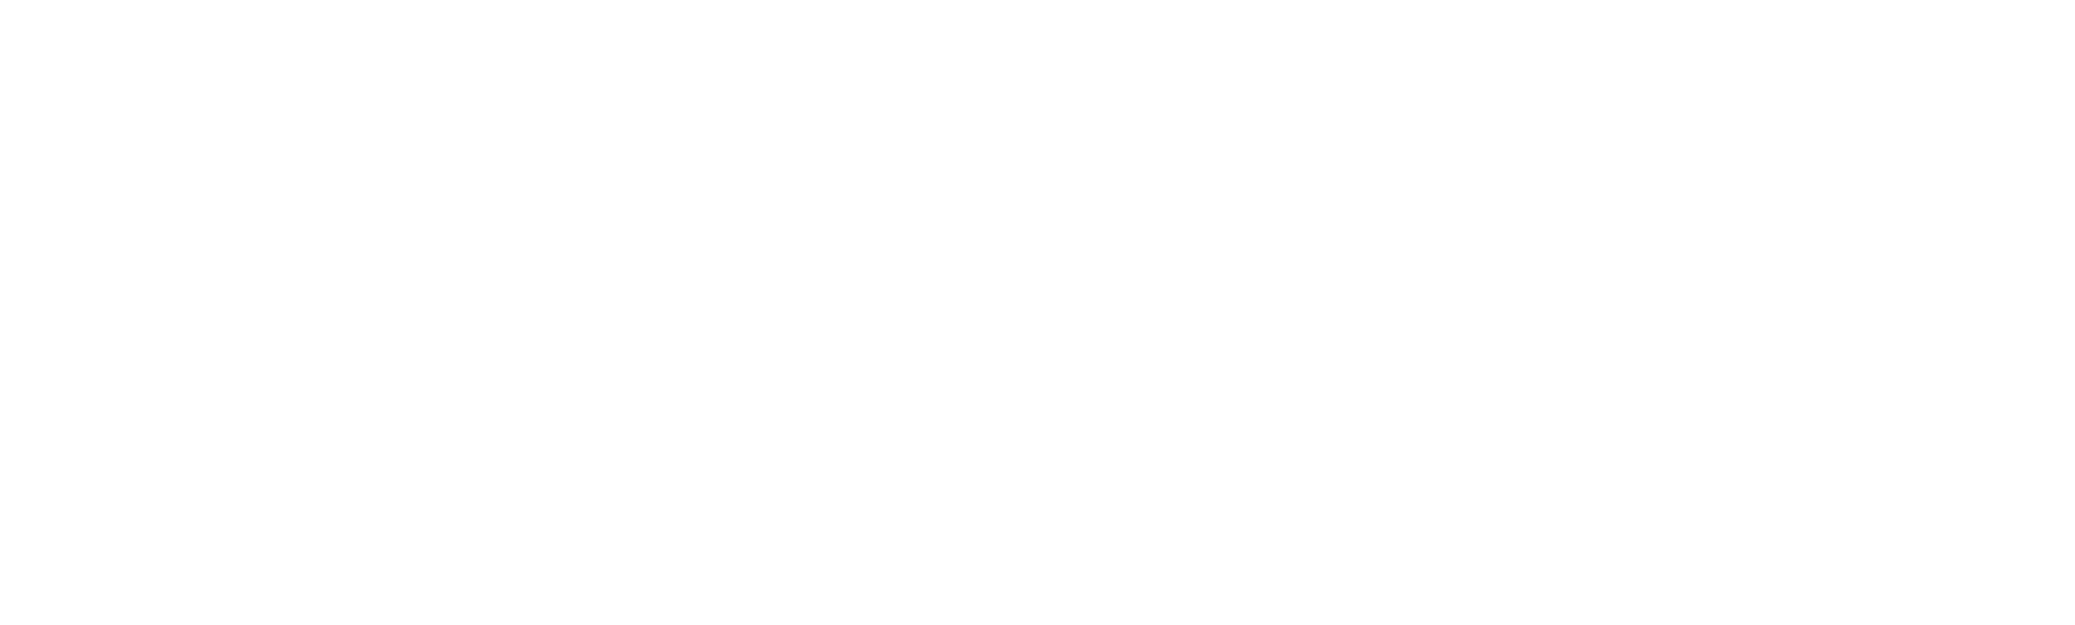 coiffeur-jn-logo-wh